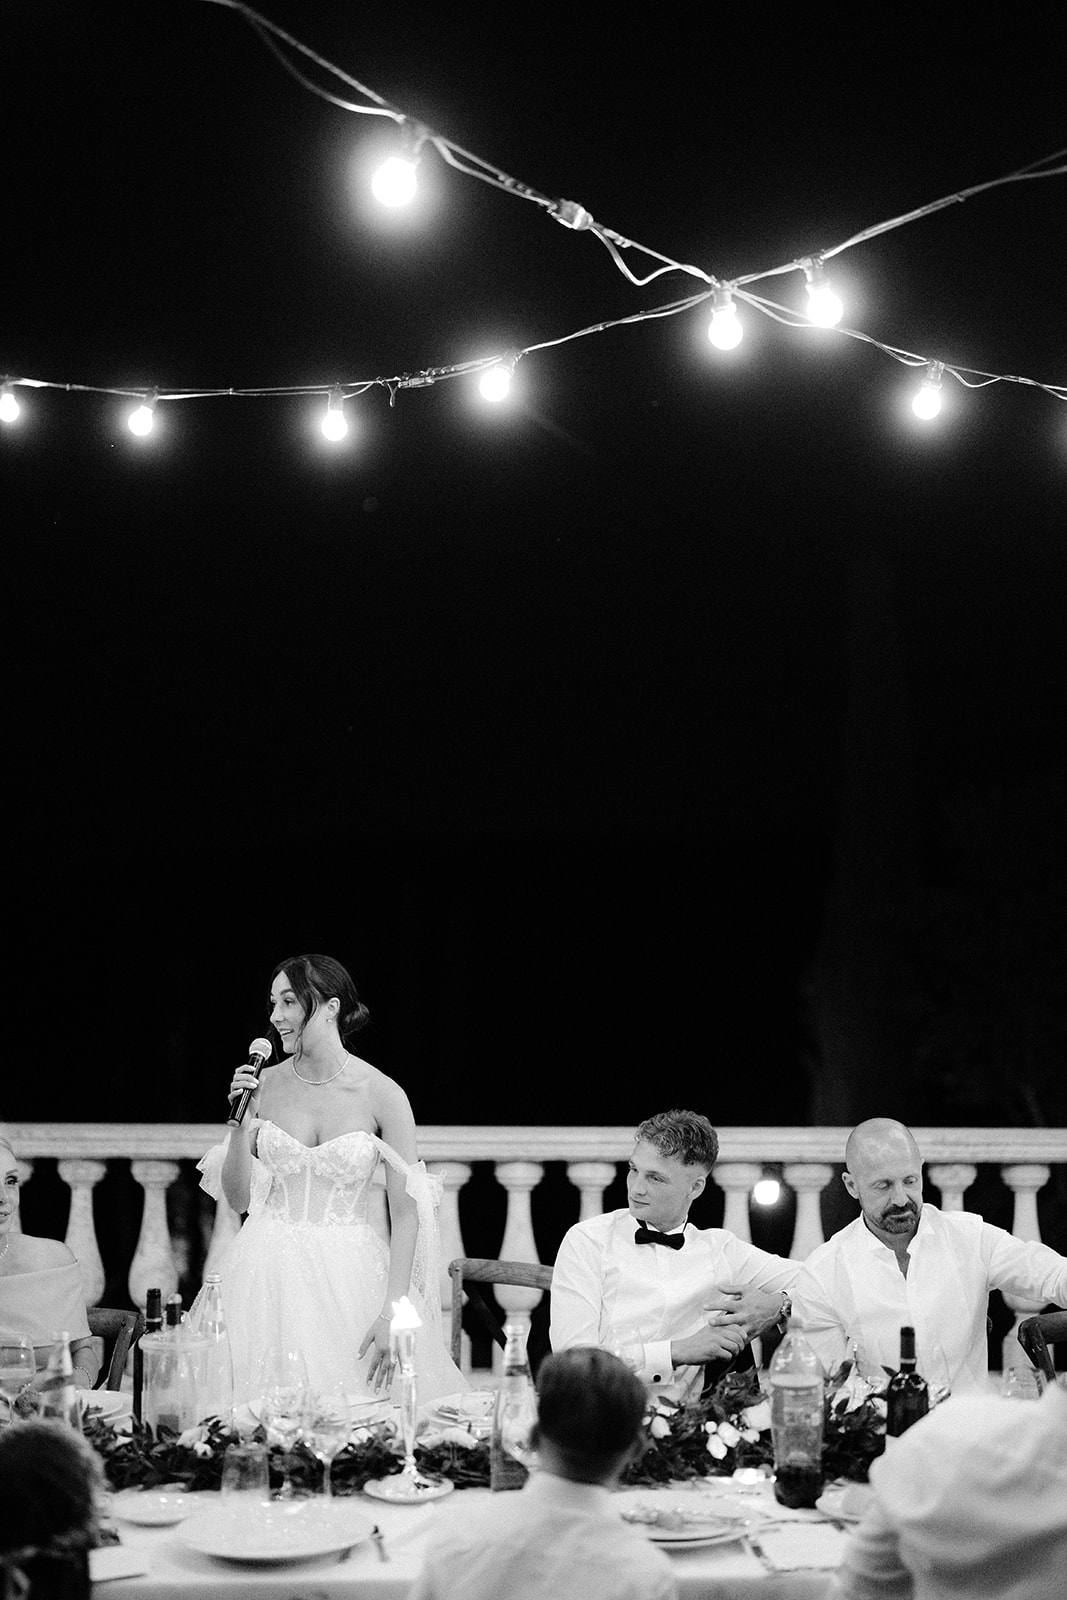 The bride's speech during the dinner at her wedding at Villa La Selva